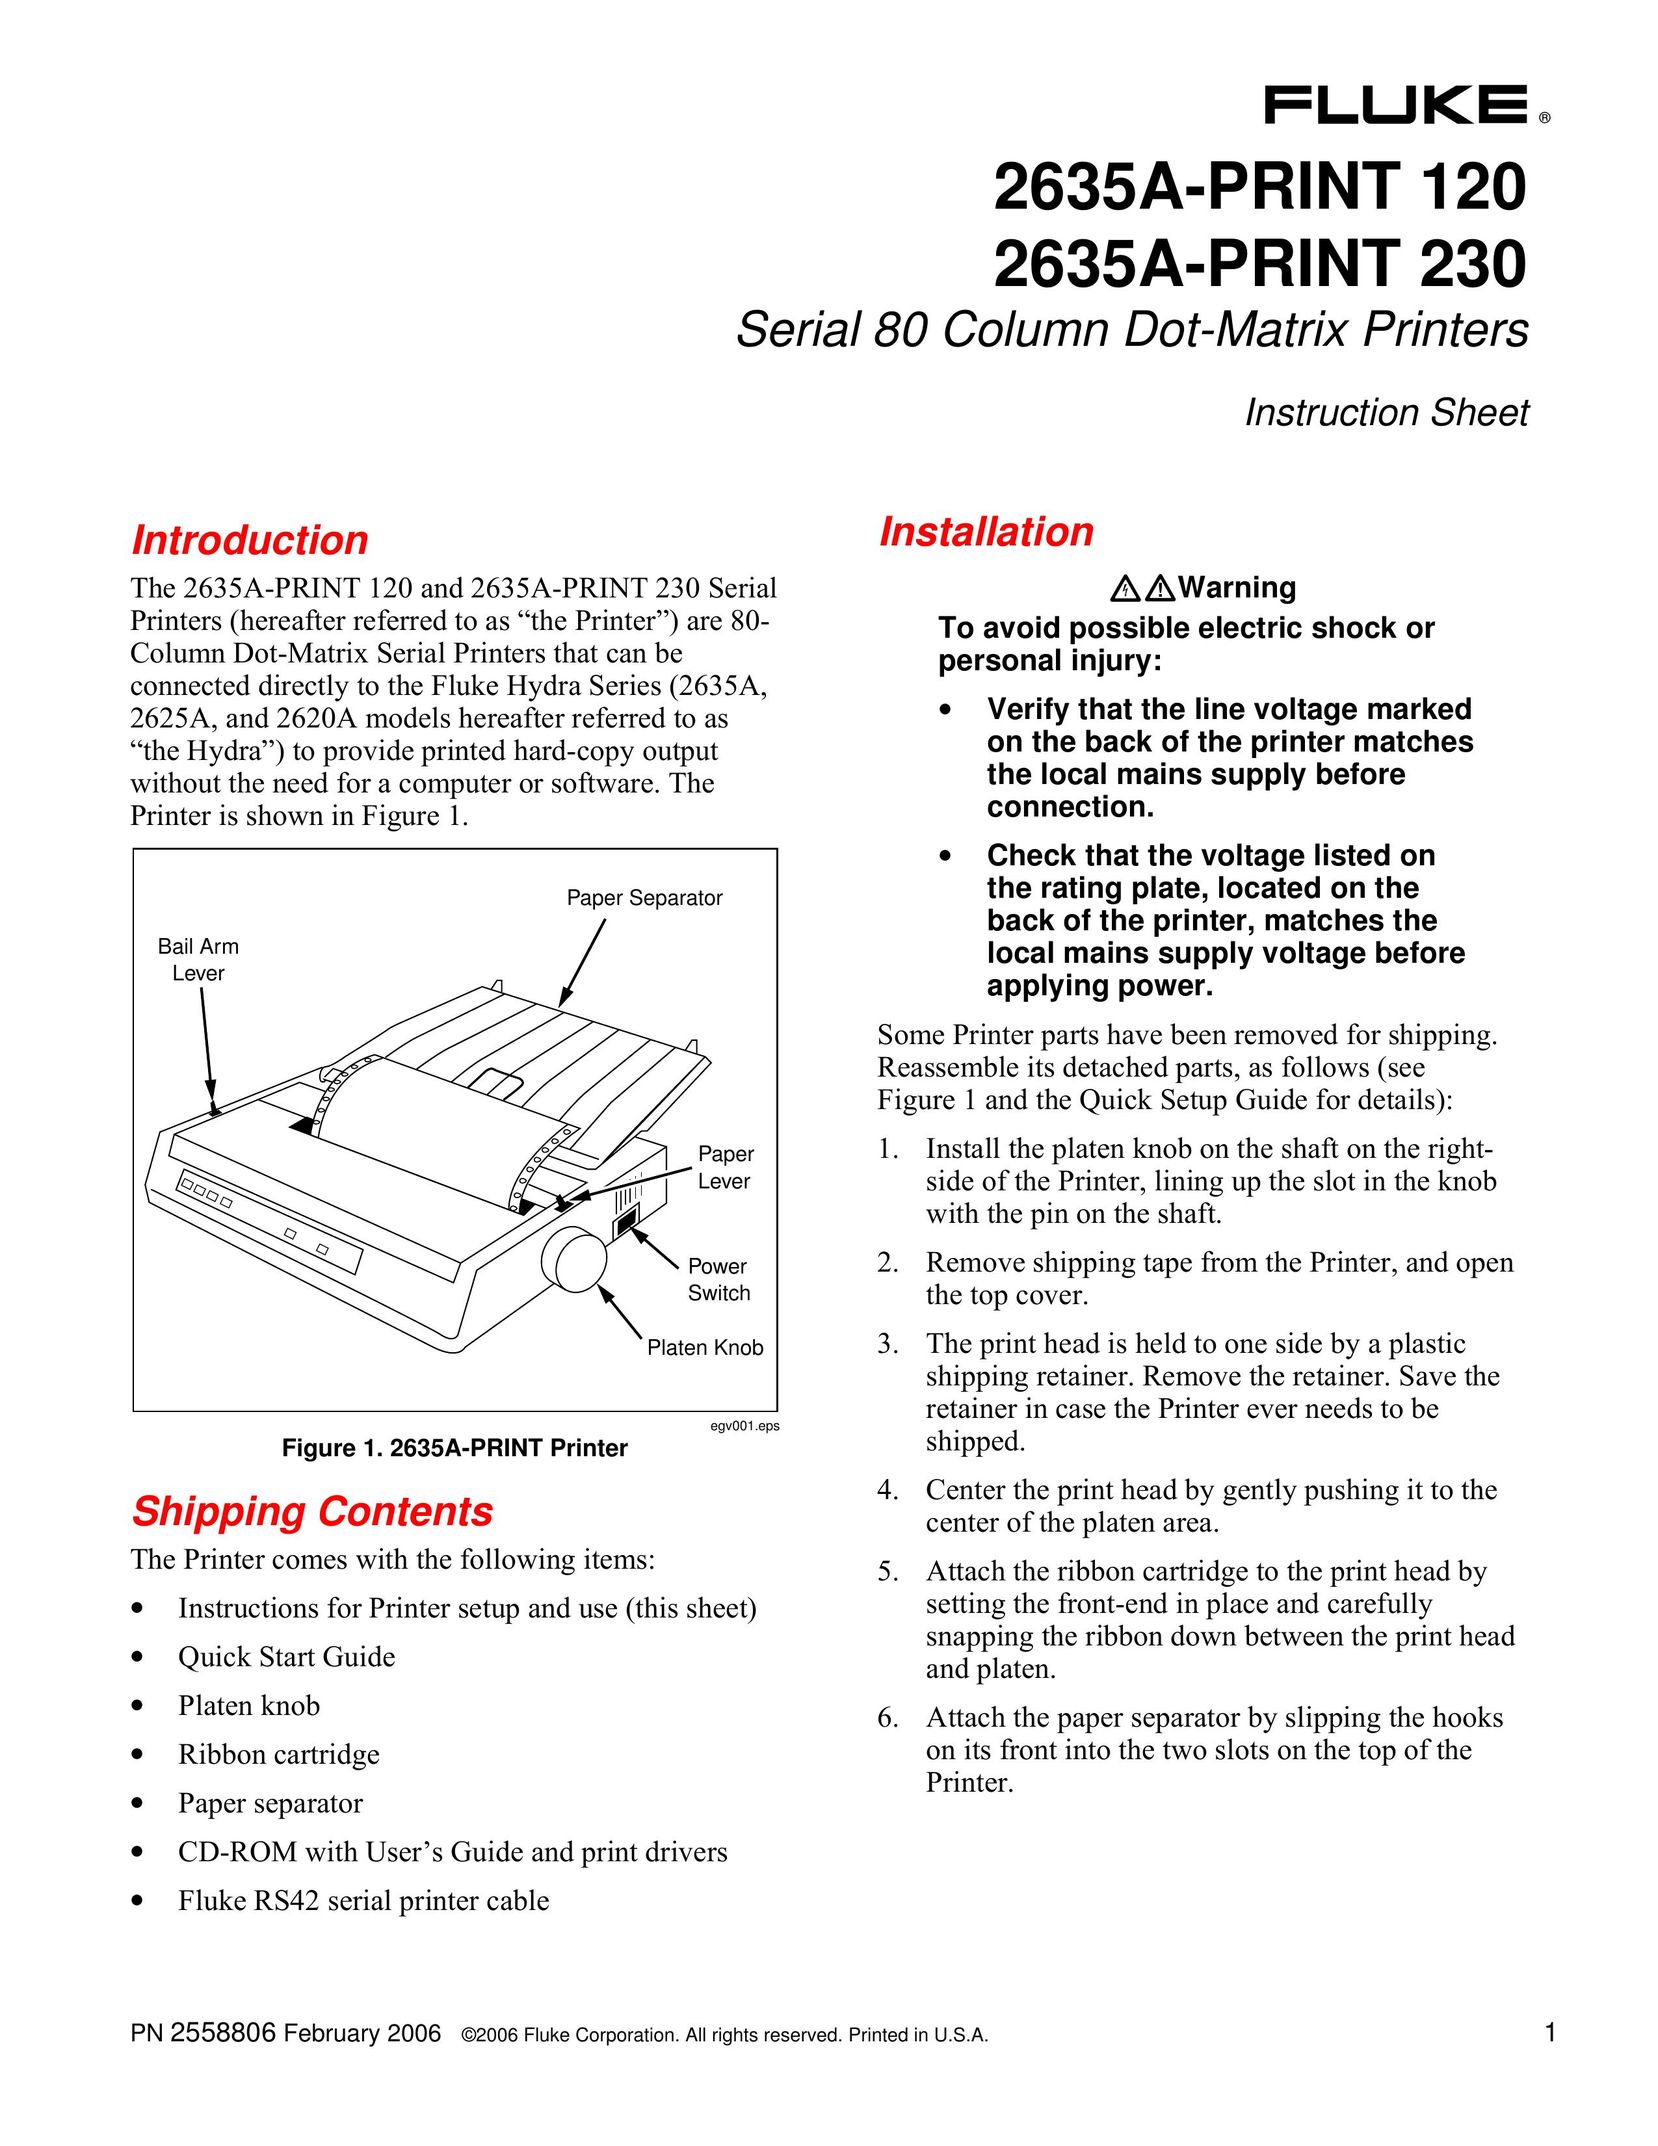 Fluke 2635A-PRINT 230 Printer User Manual